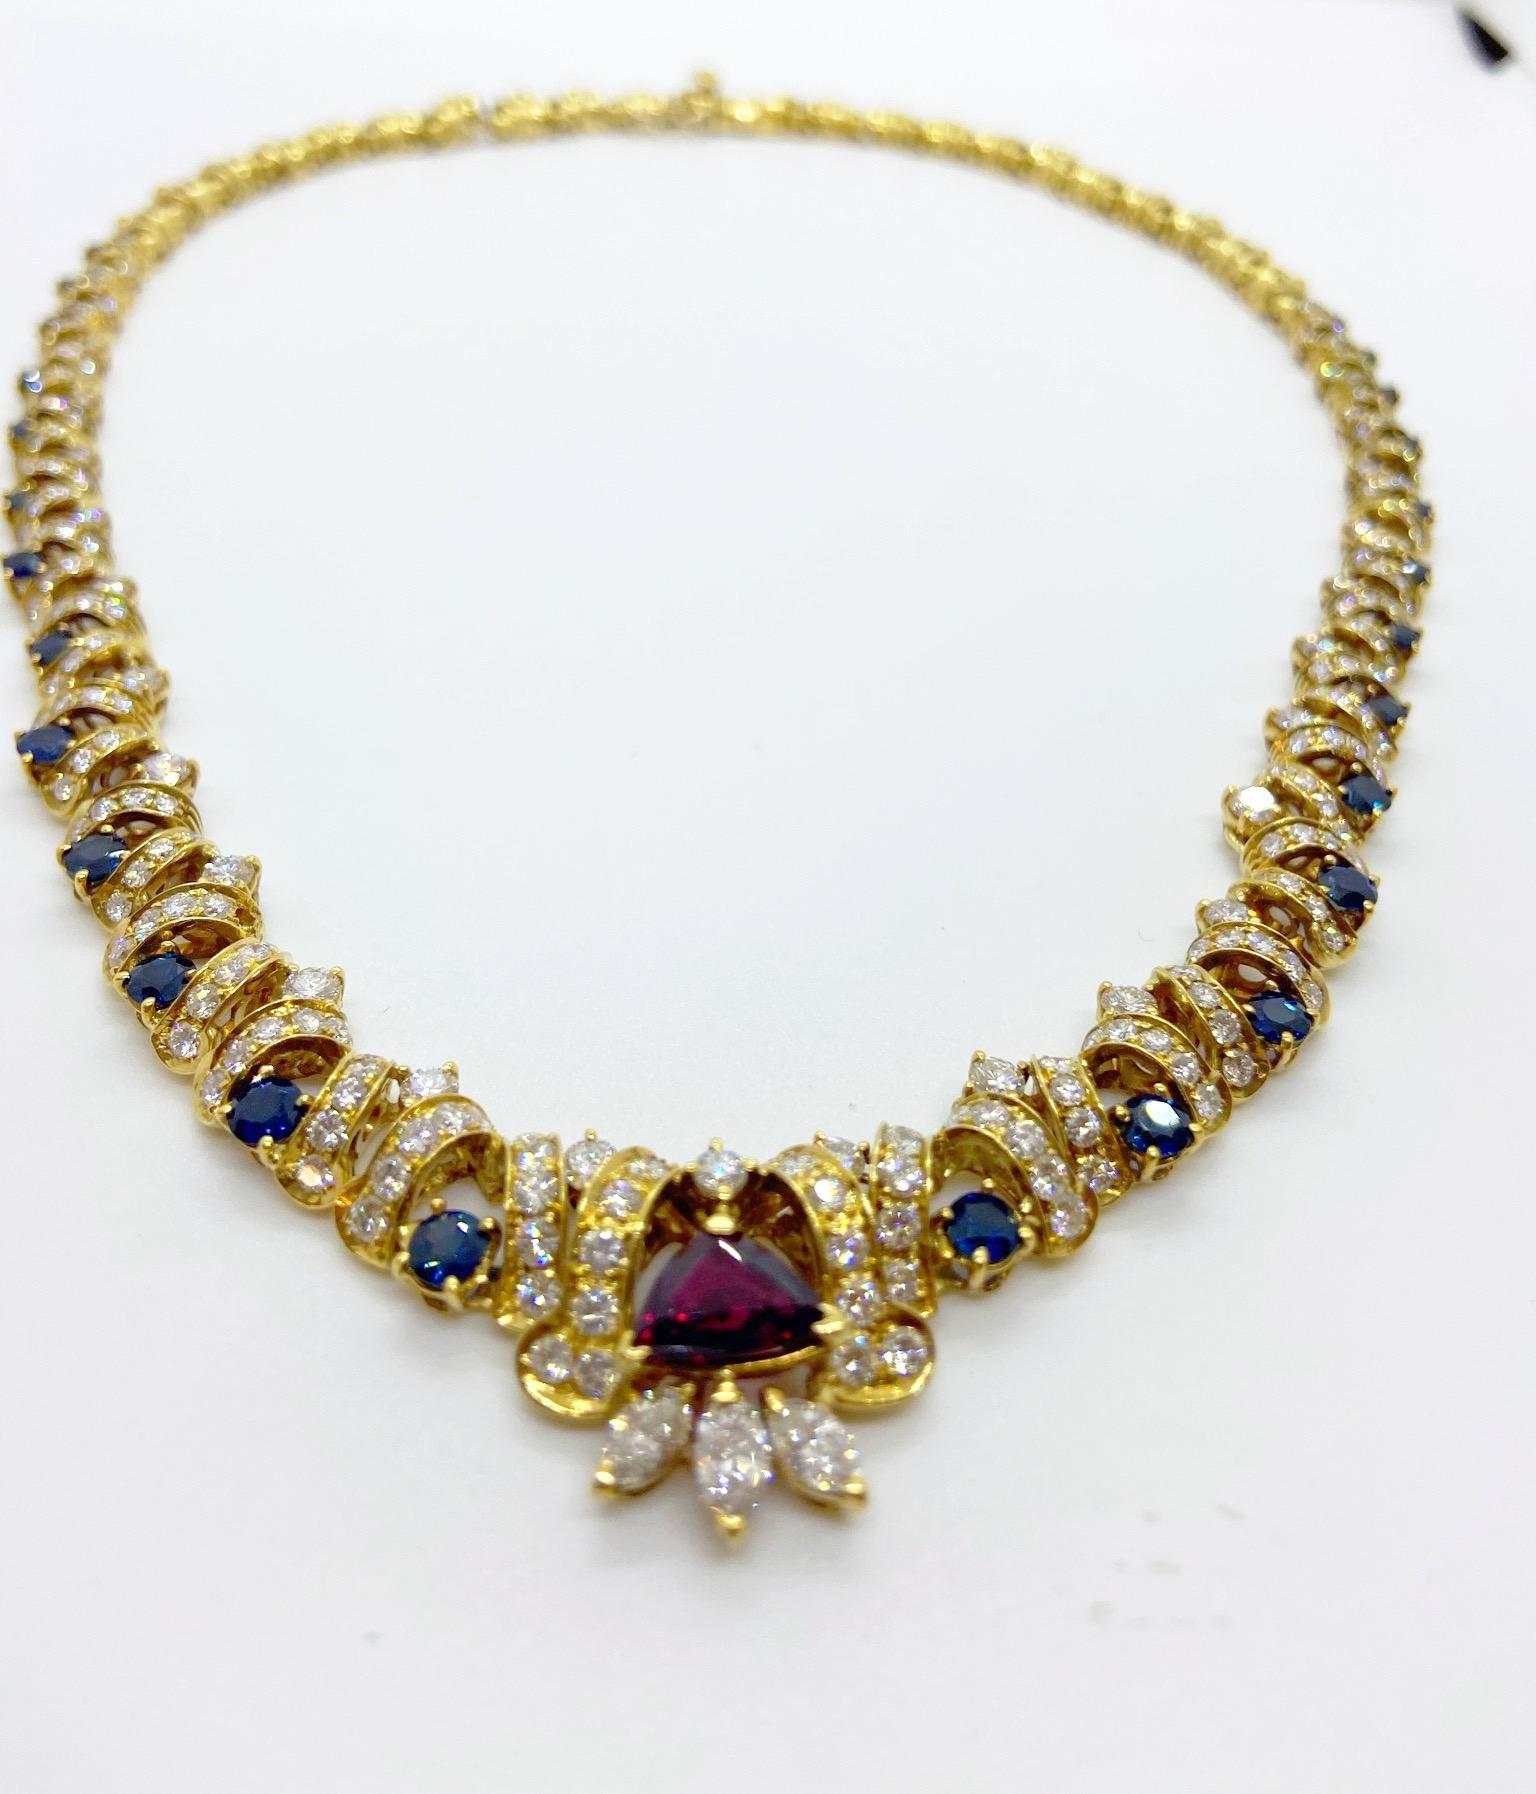 Trillion Cut Nino Verita for Effe V 18 Karat Gold Necklace with Diamond, Ruby, and Sapphire